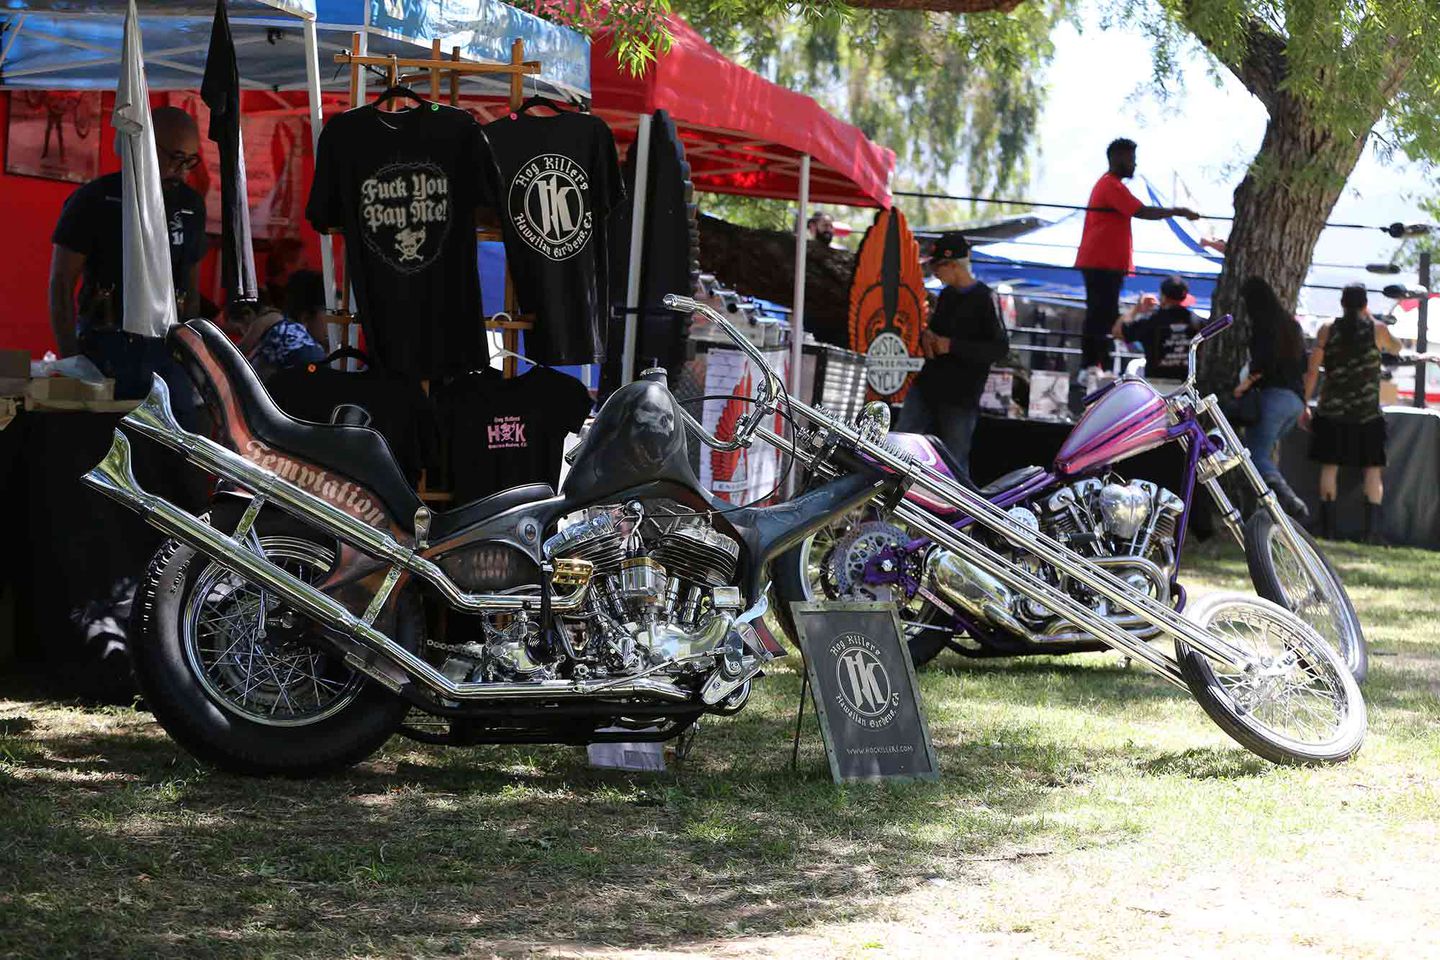 * Jacke Zip Worker Biker Harley-Chopper-Motiv Totenkopf Kustom Bike *4240 